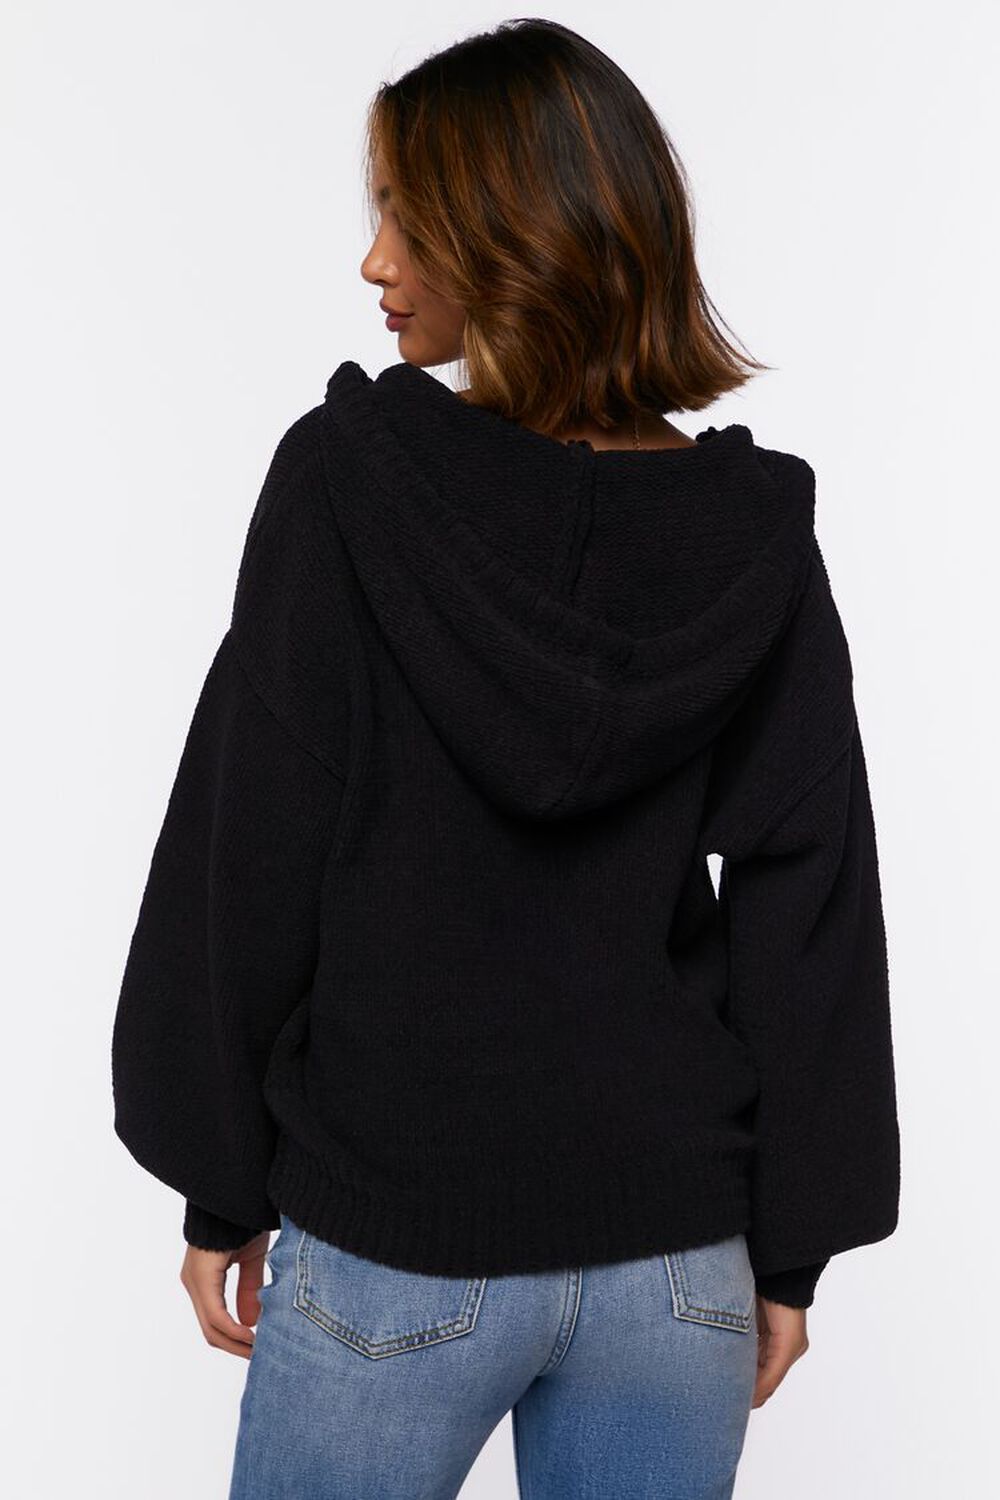 BLACK Hooded Drop-Sleeve Sweater, image 3